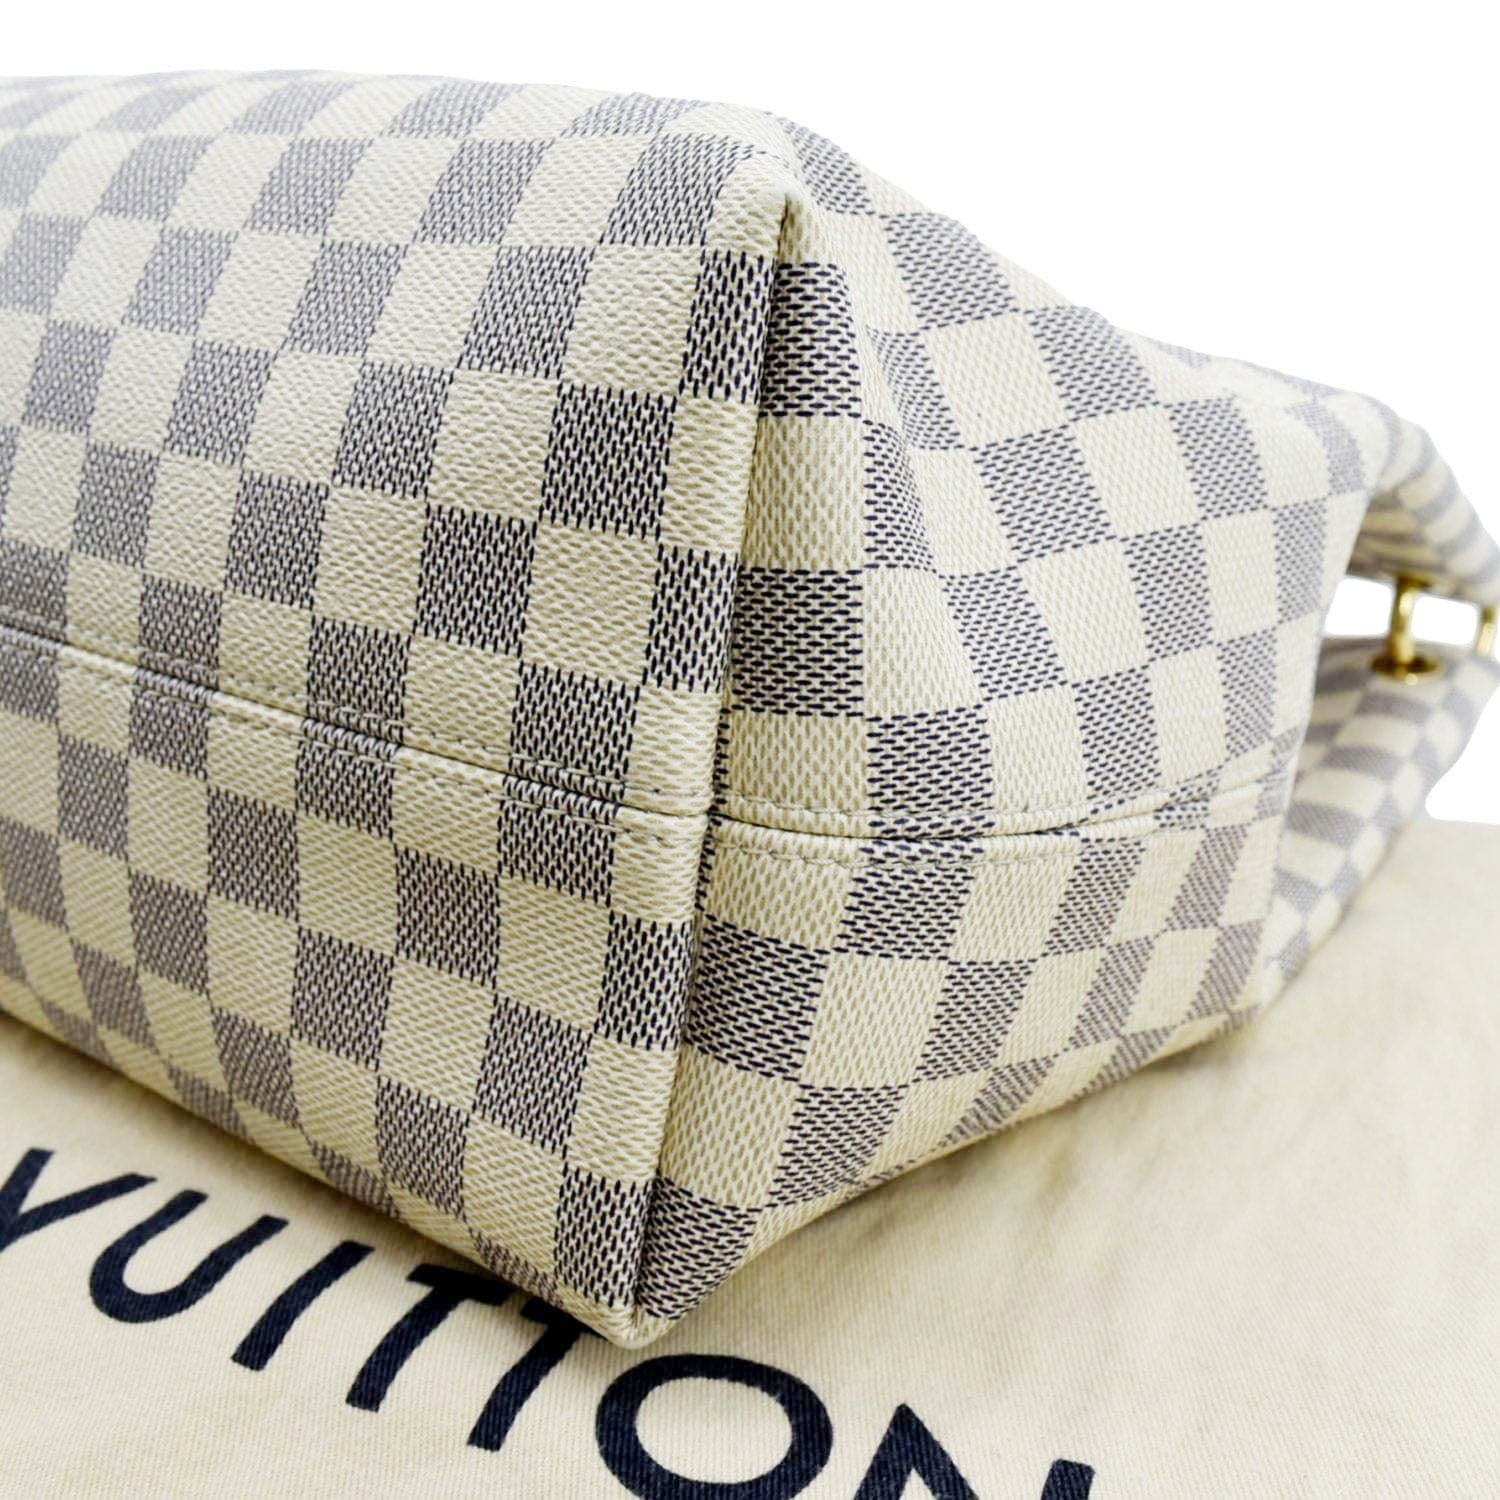 Louis Vuitton Damier Azur Graceful PM - Neutrals Hobos, Handbags